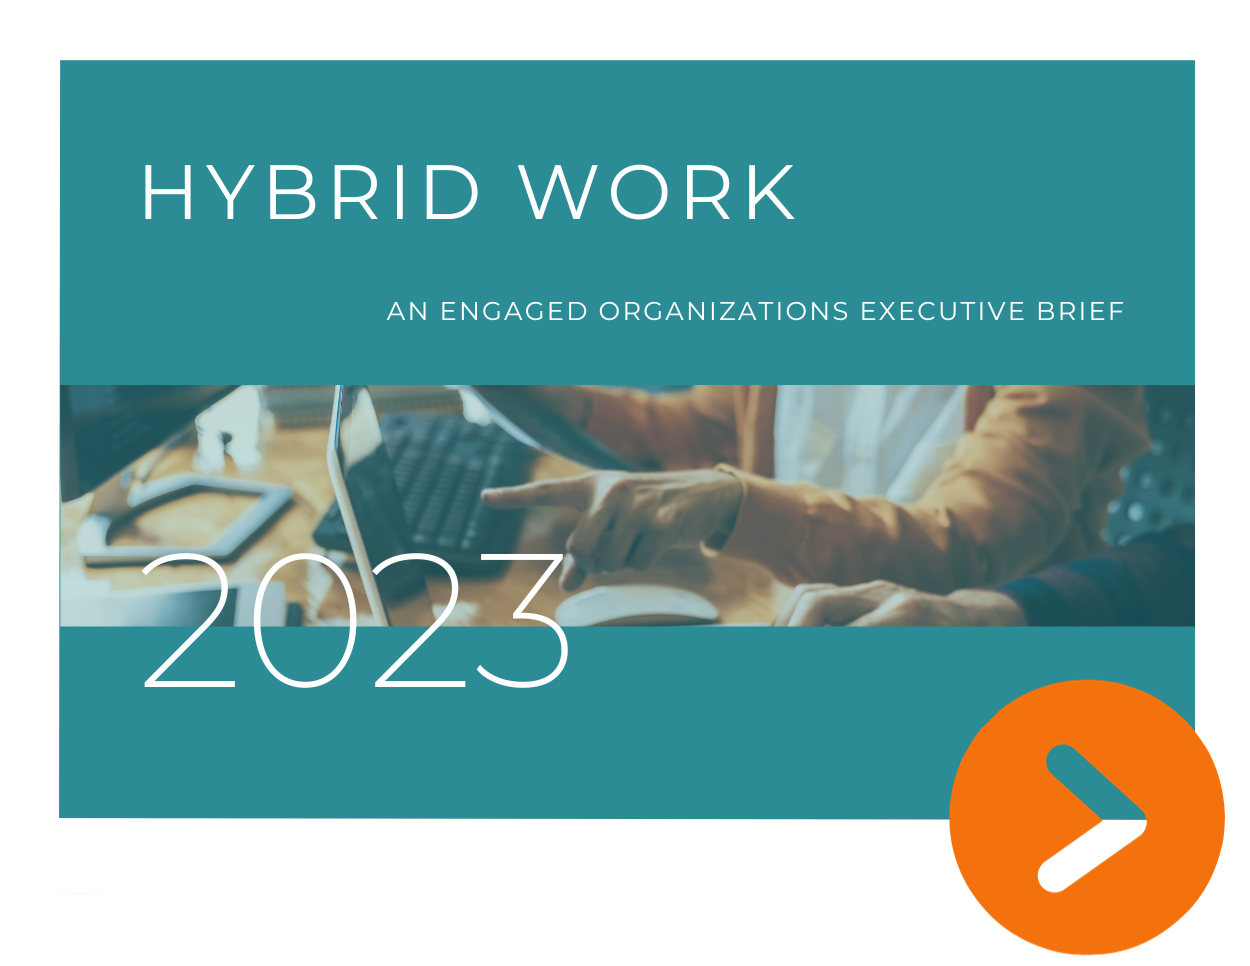 Engaged Organizations' Hybrid Work Executive Brief